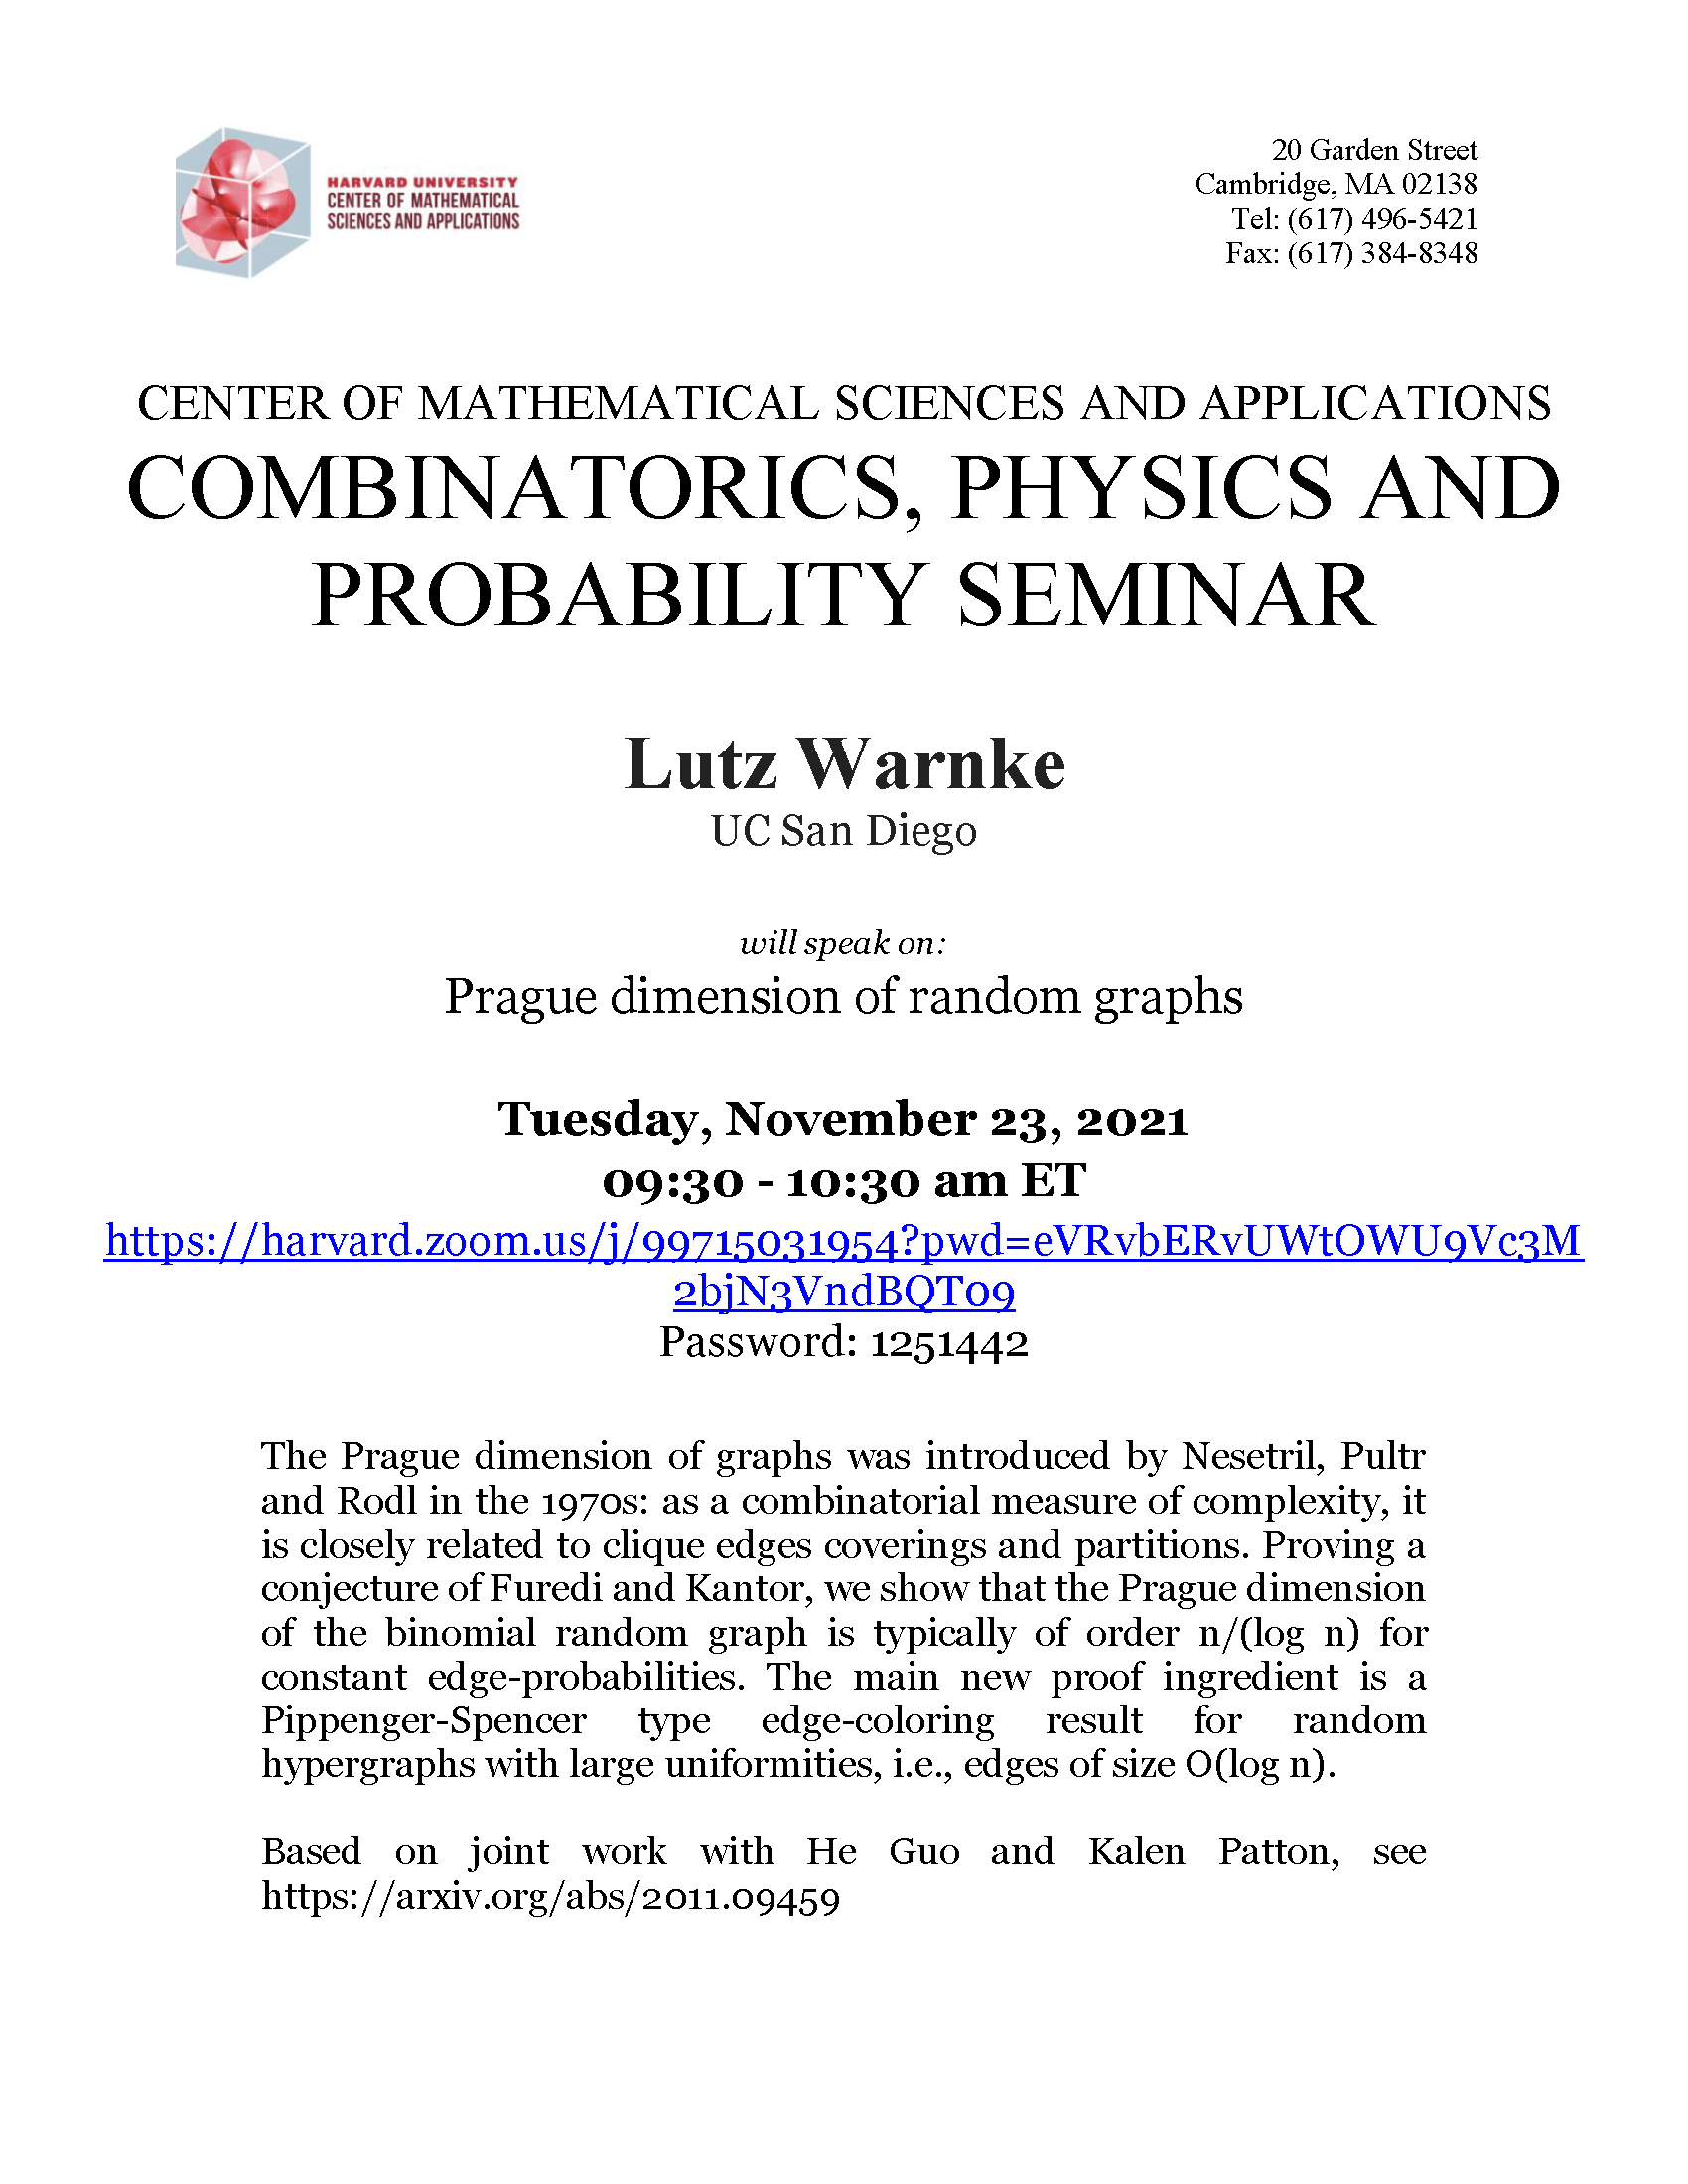 CMSA-Combinatorics-Physics-and-Probability-Seminar-11.23.21